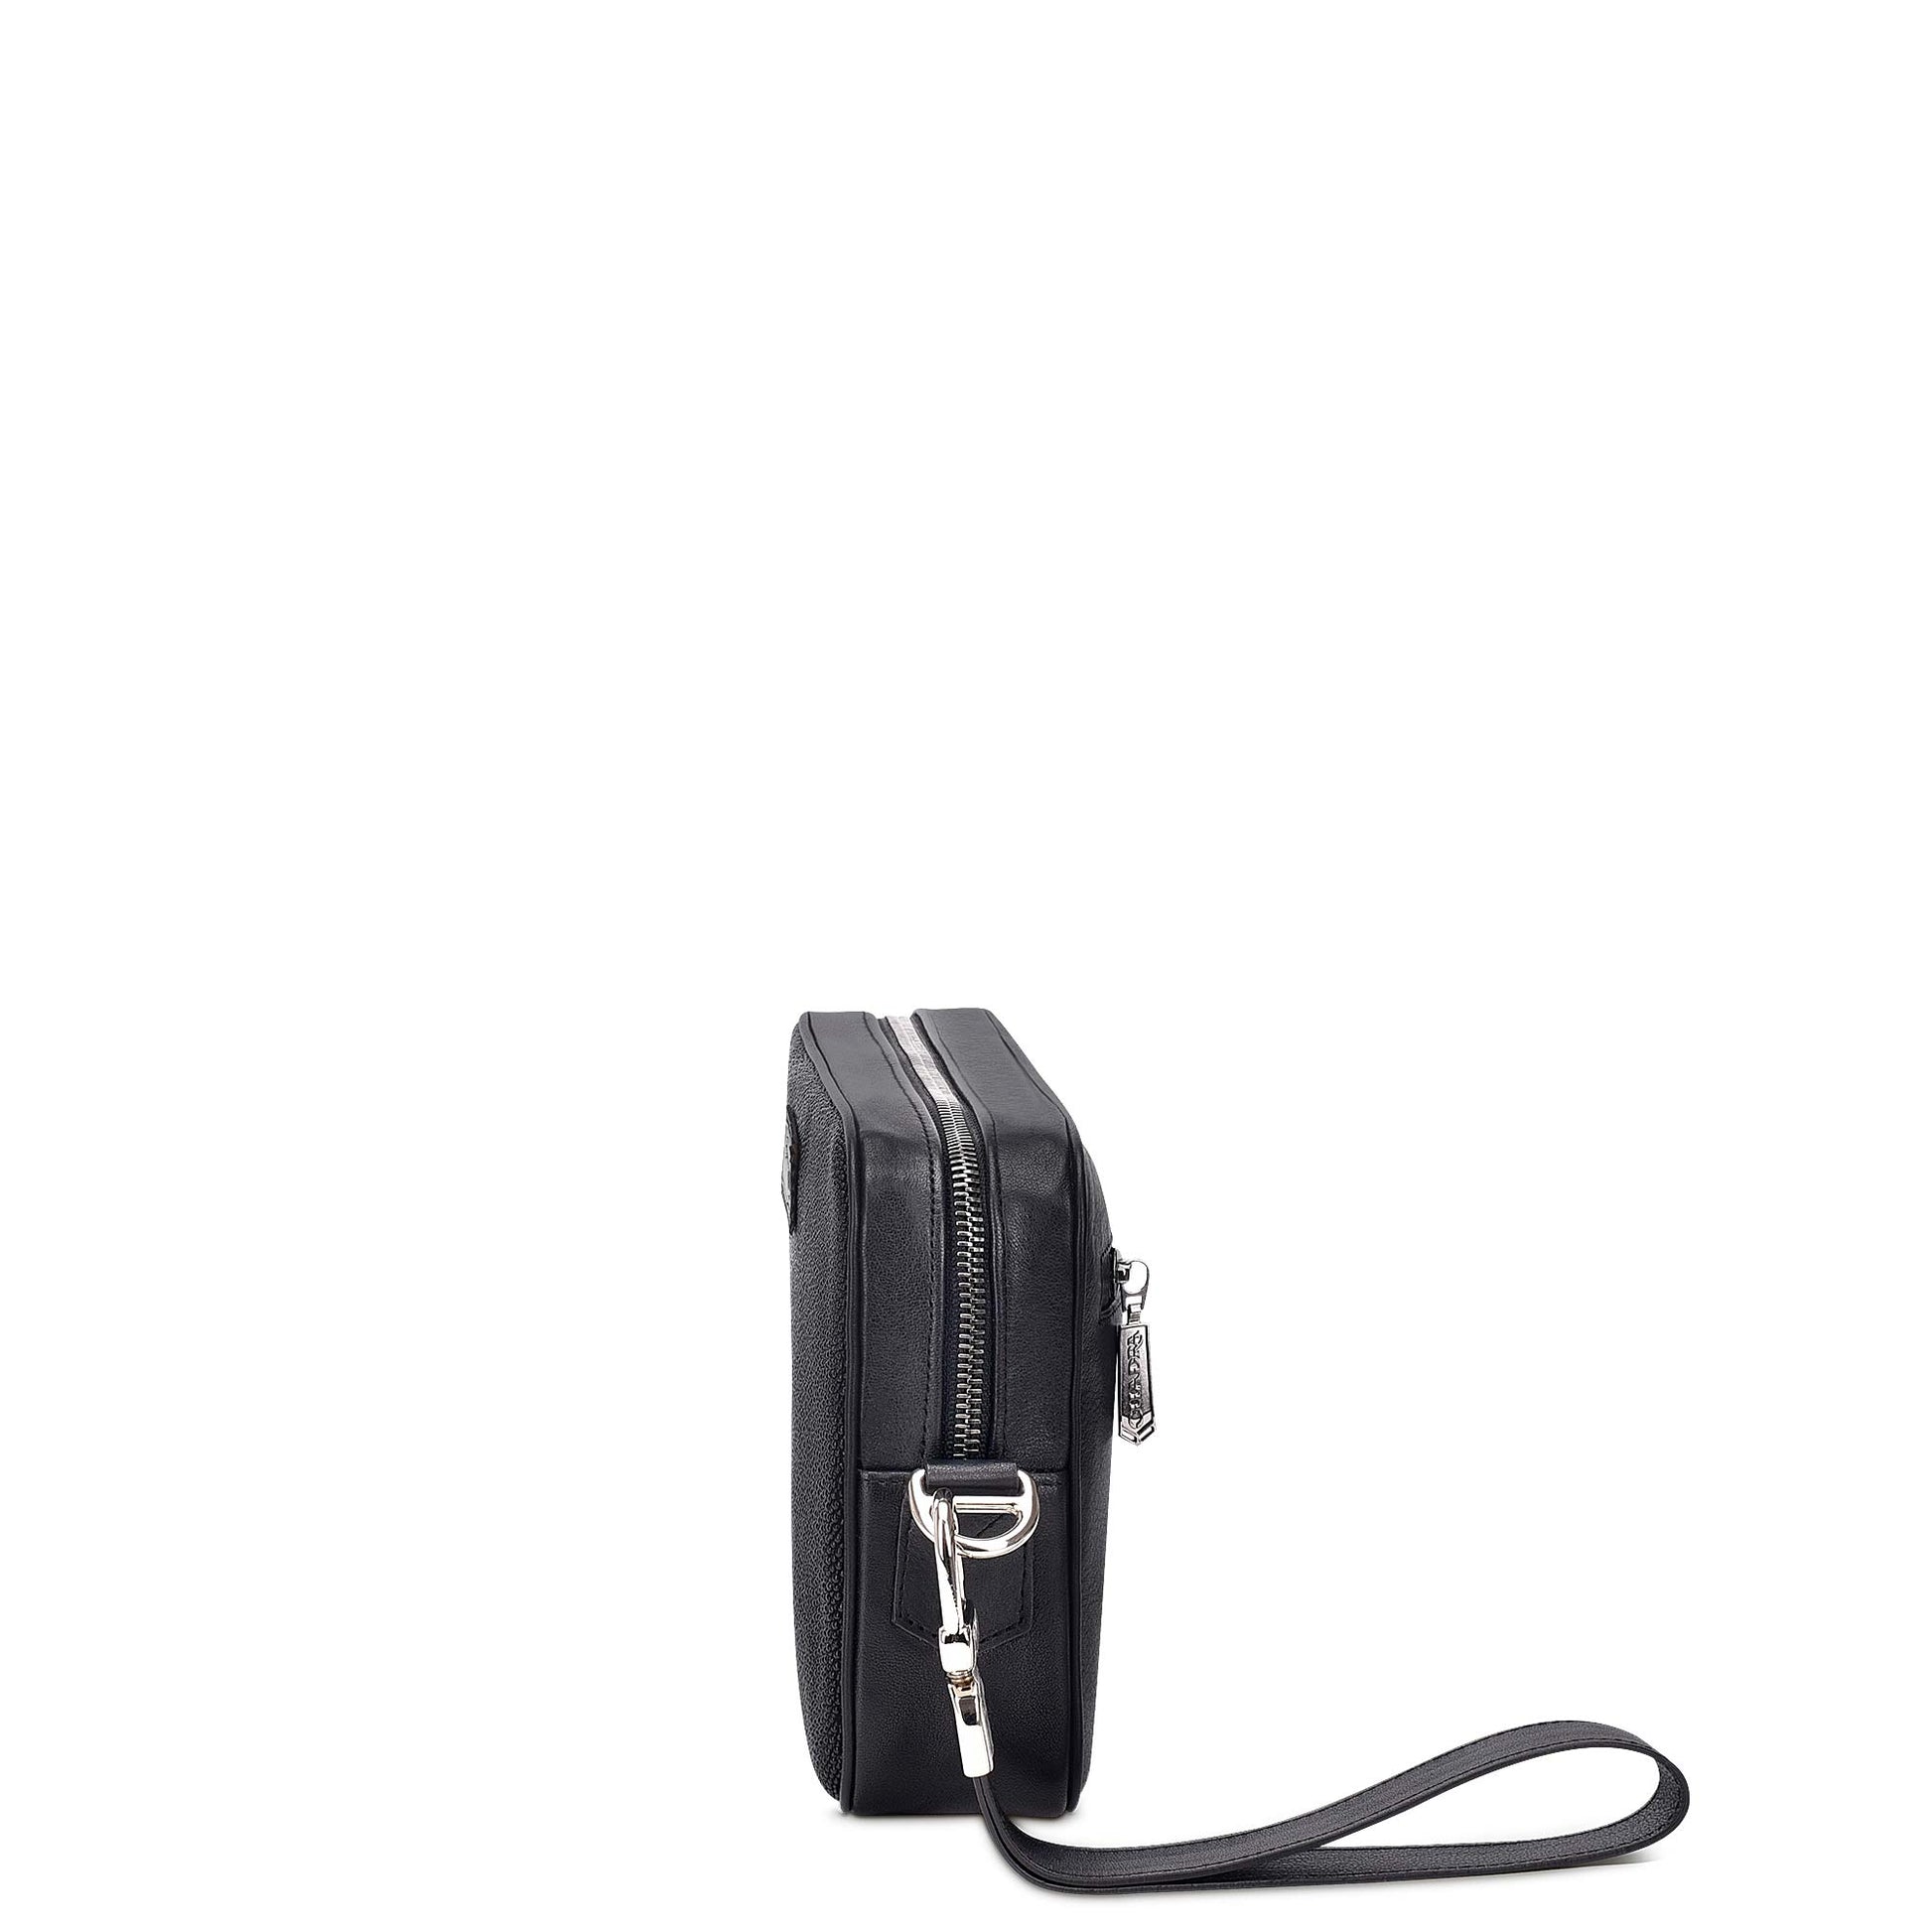 Black Exotic leather shoulder bag, handmade - BOC04FU - Cuadra Shop